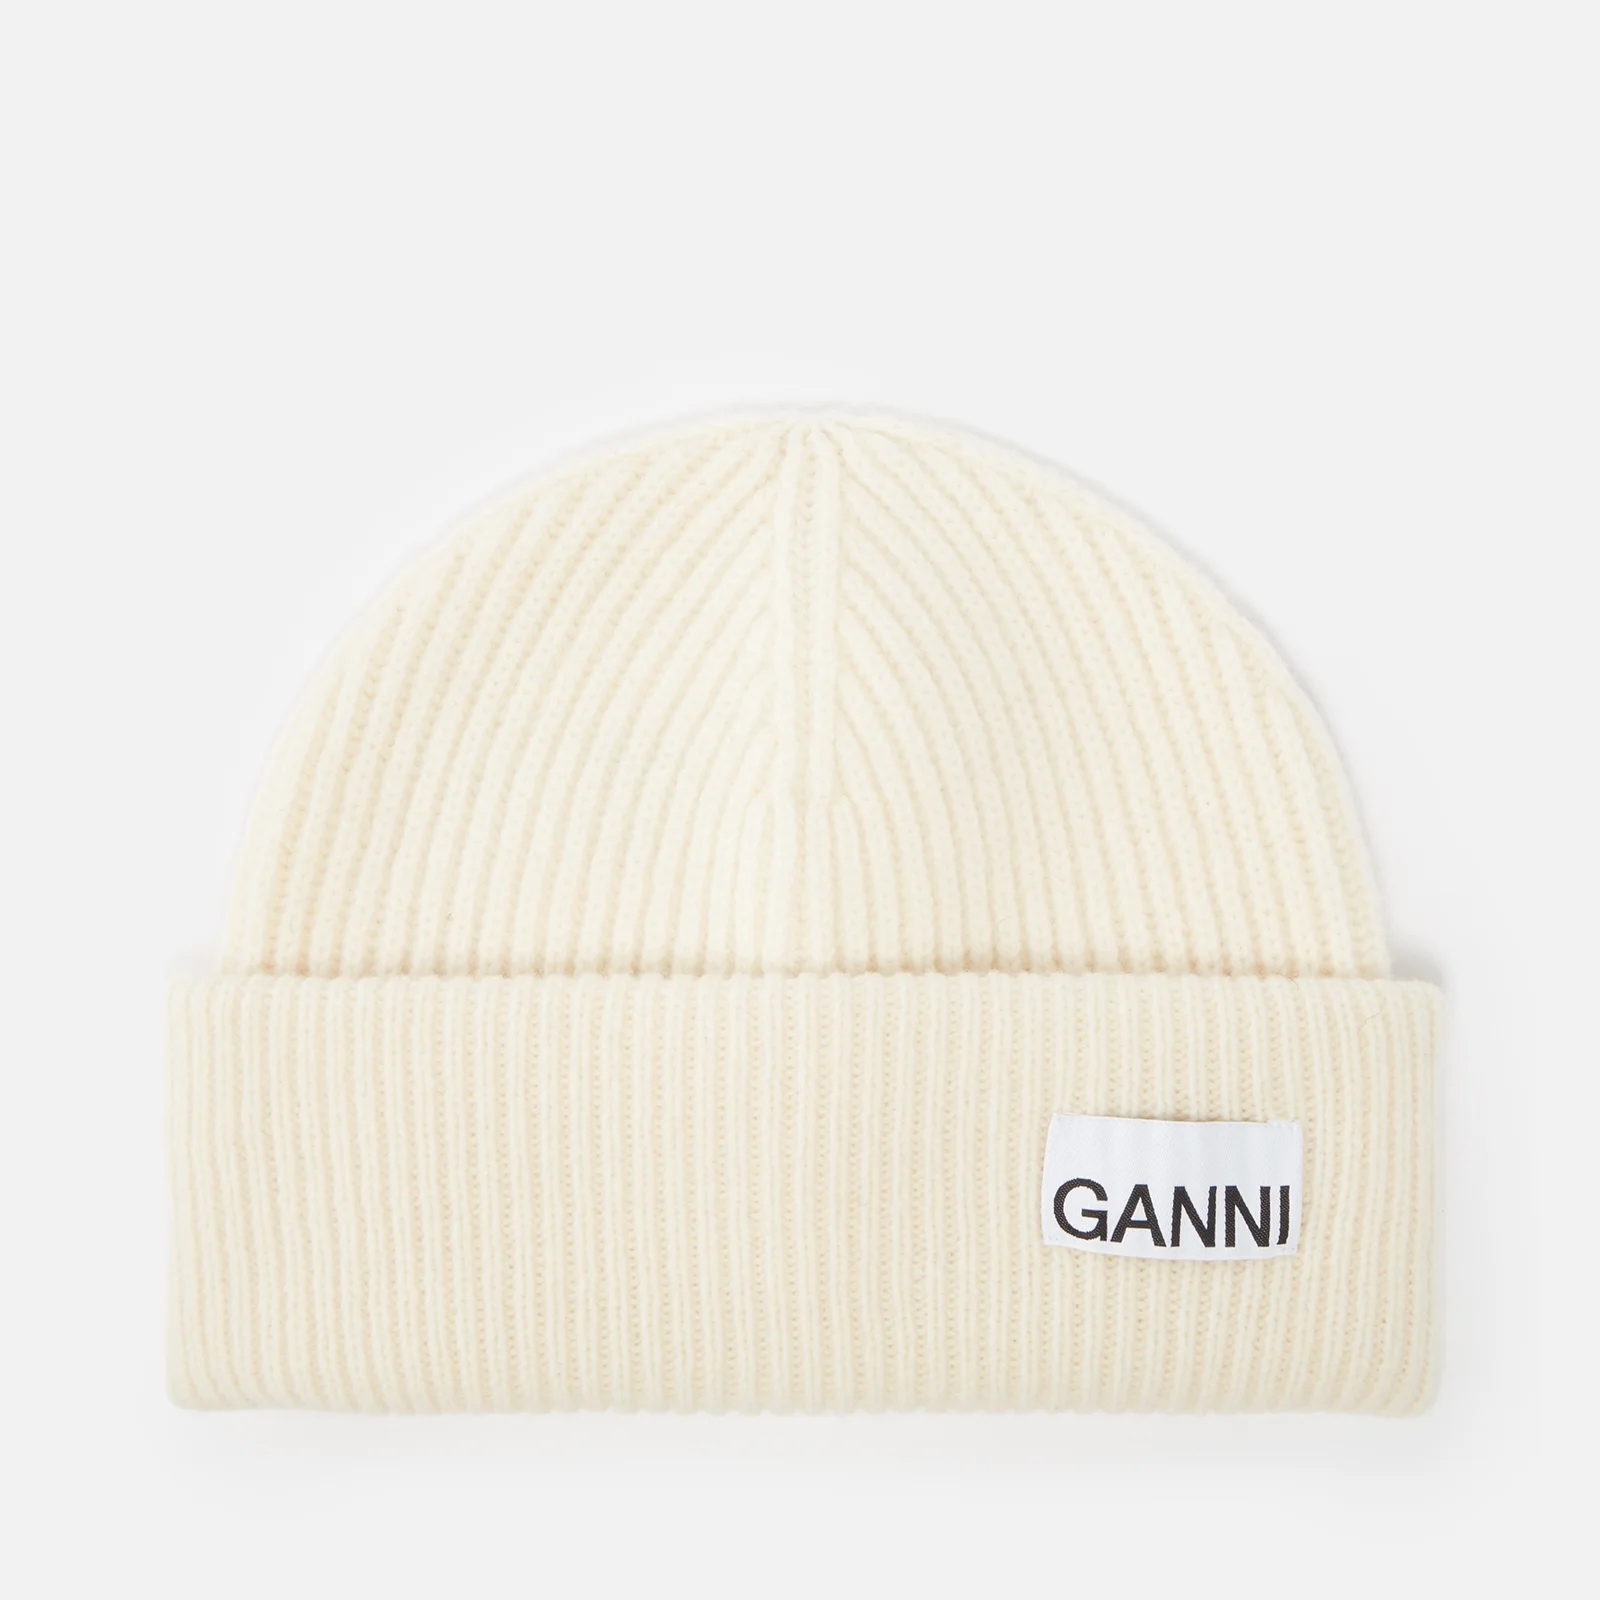 Ganni Light Structured Rib-Knit Beanie Image 1